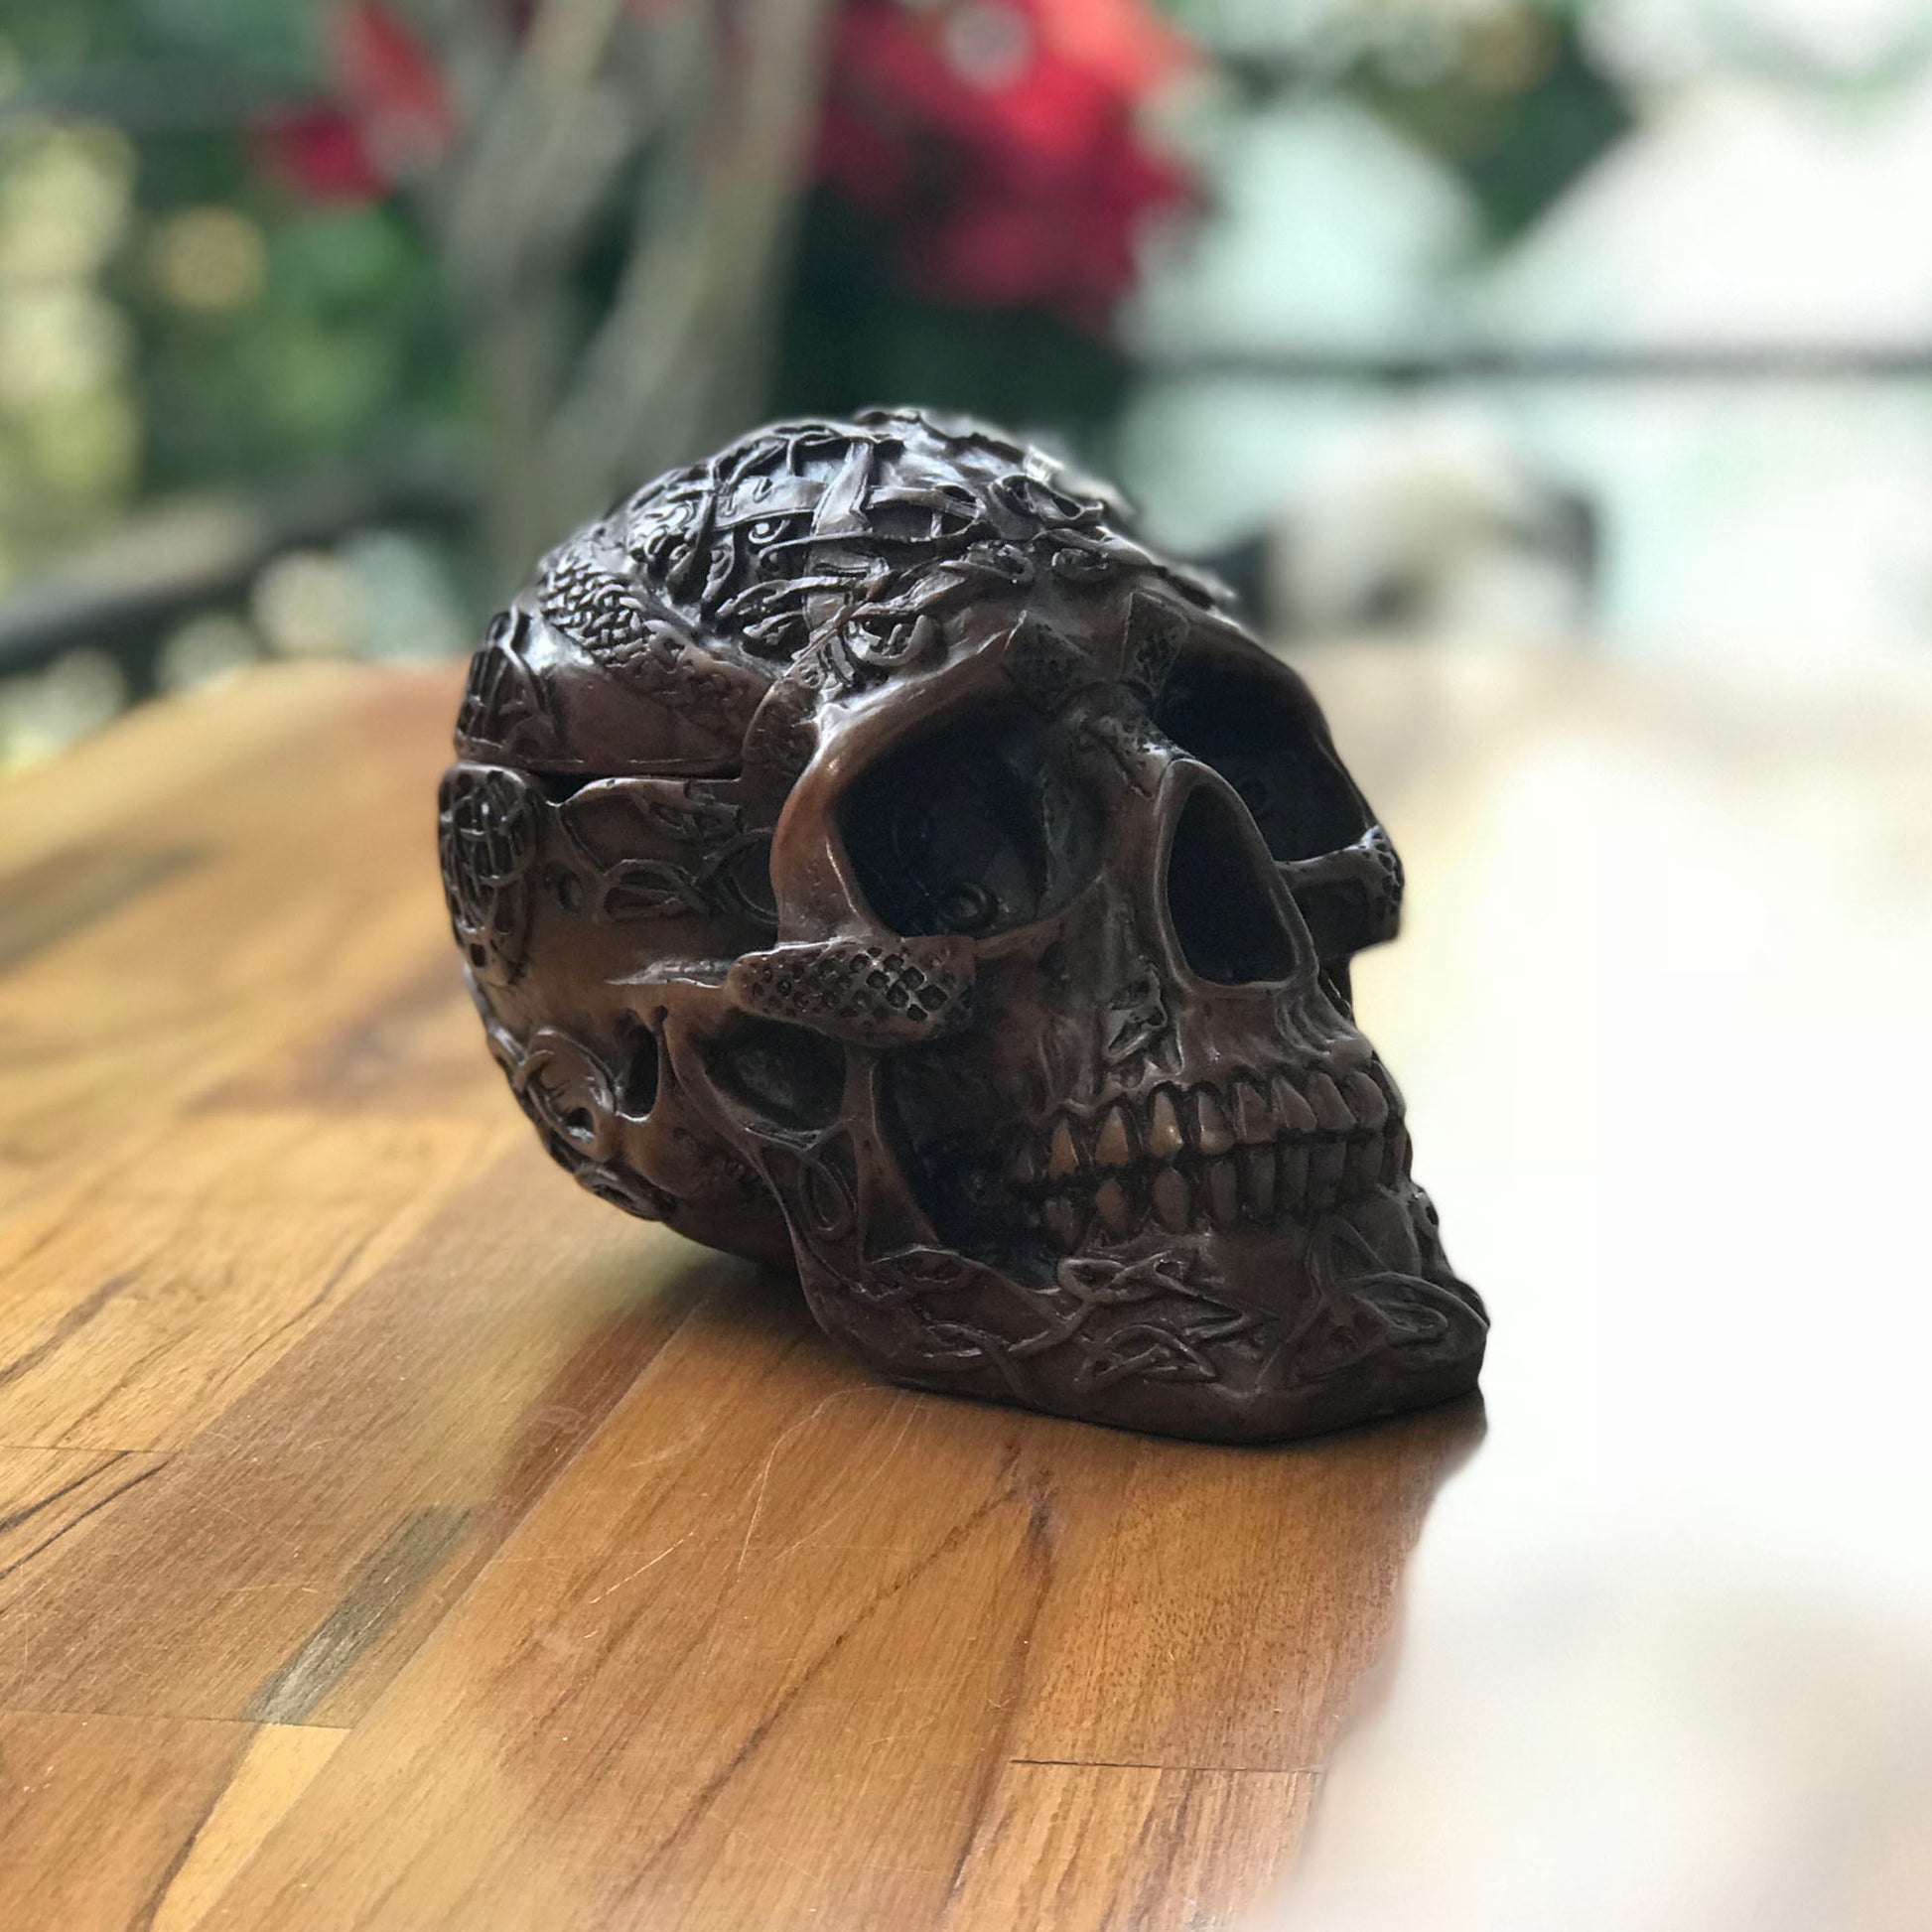 Skull Ashtray made from resin